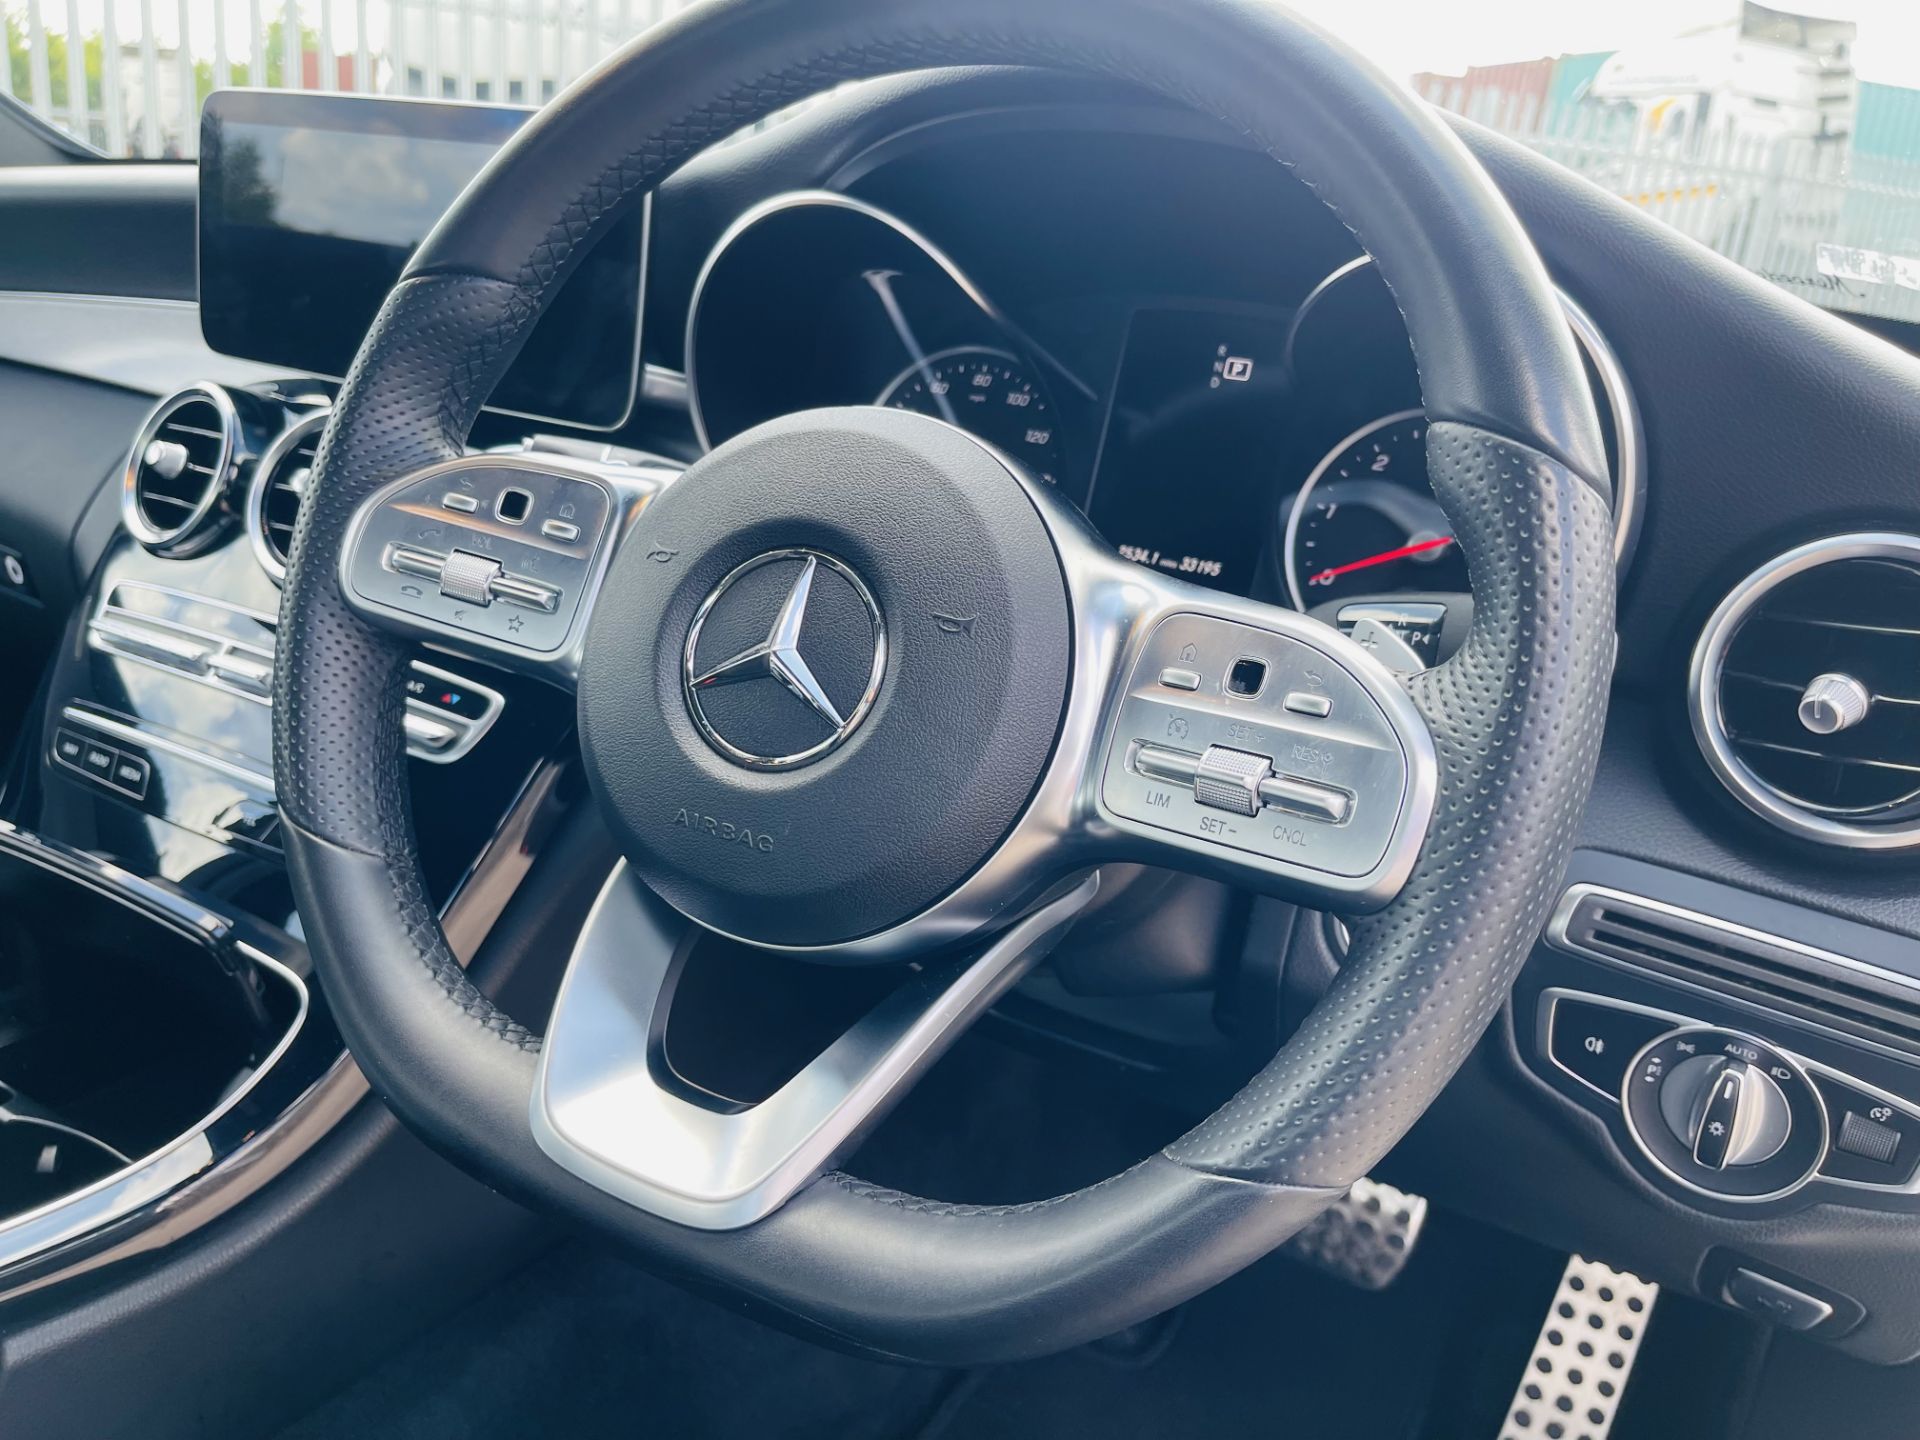 Mercedes Benz C220 AMG Line 9G-Tronic Auto 2019 ‘69 Reg’ - Sat Nav - A/C - Euro 6 - ULEZ Compliant - Image 18 of 30